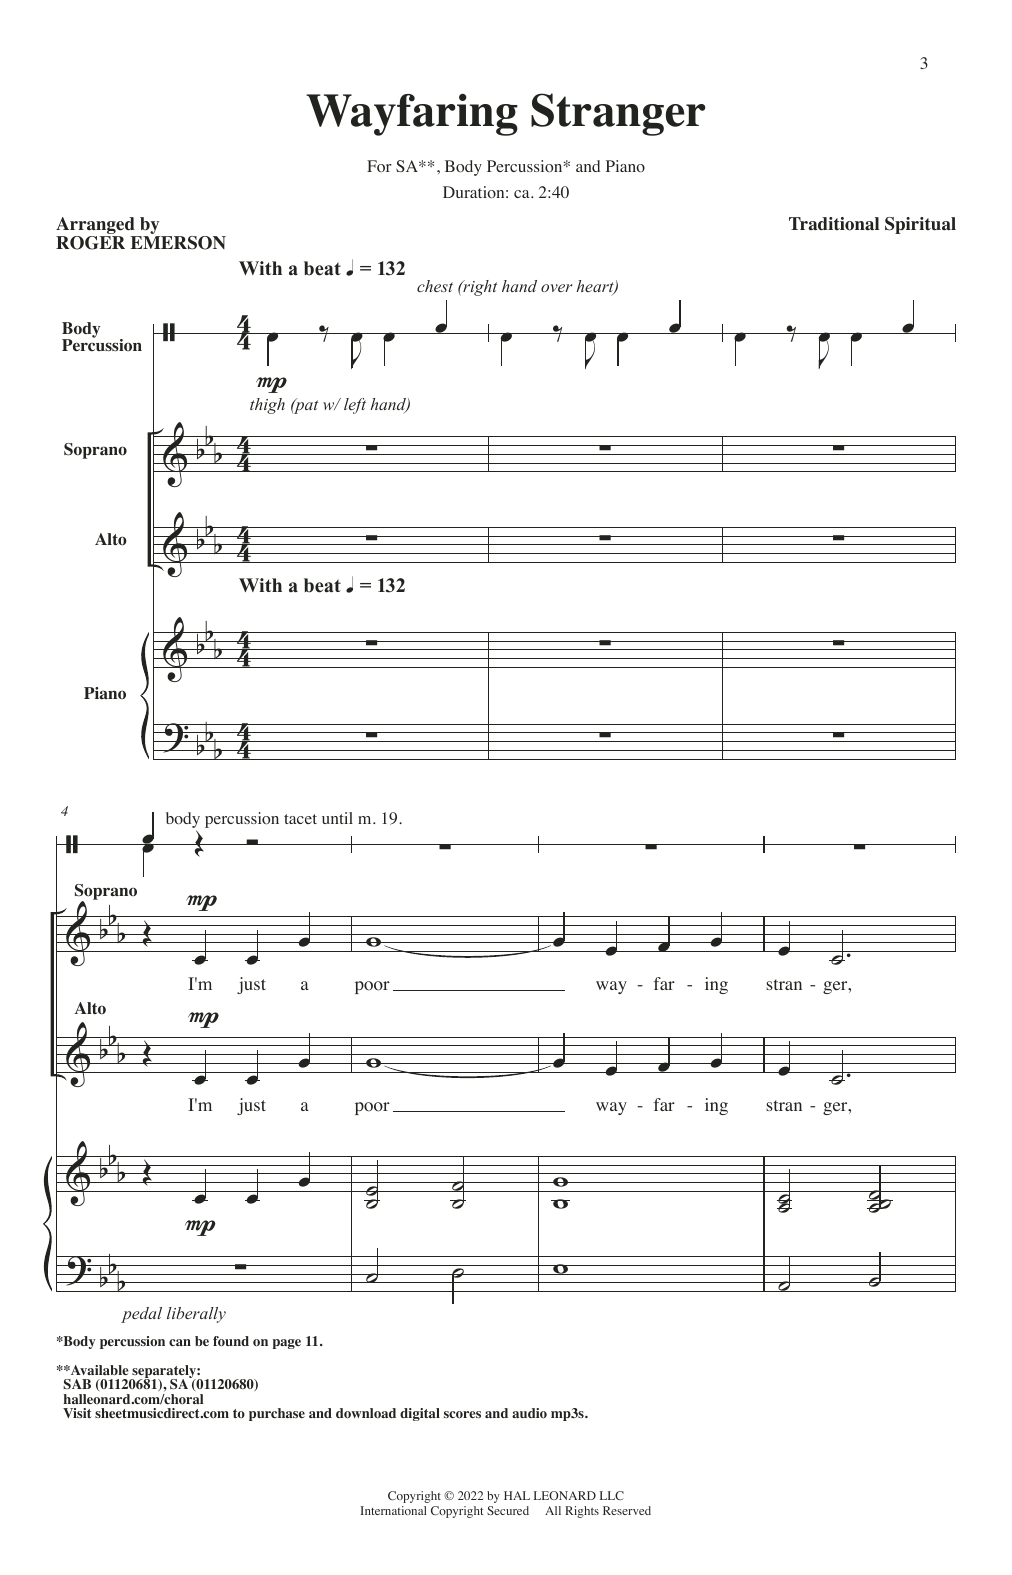 Traditional Spiritual Wayfaring Stranger (arr. Roger Emerson) Sheet Music Notes & Chords for SAB Choir - Download or Print PDF